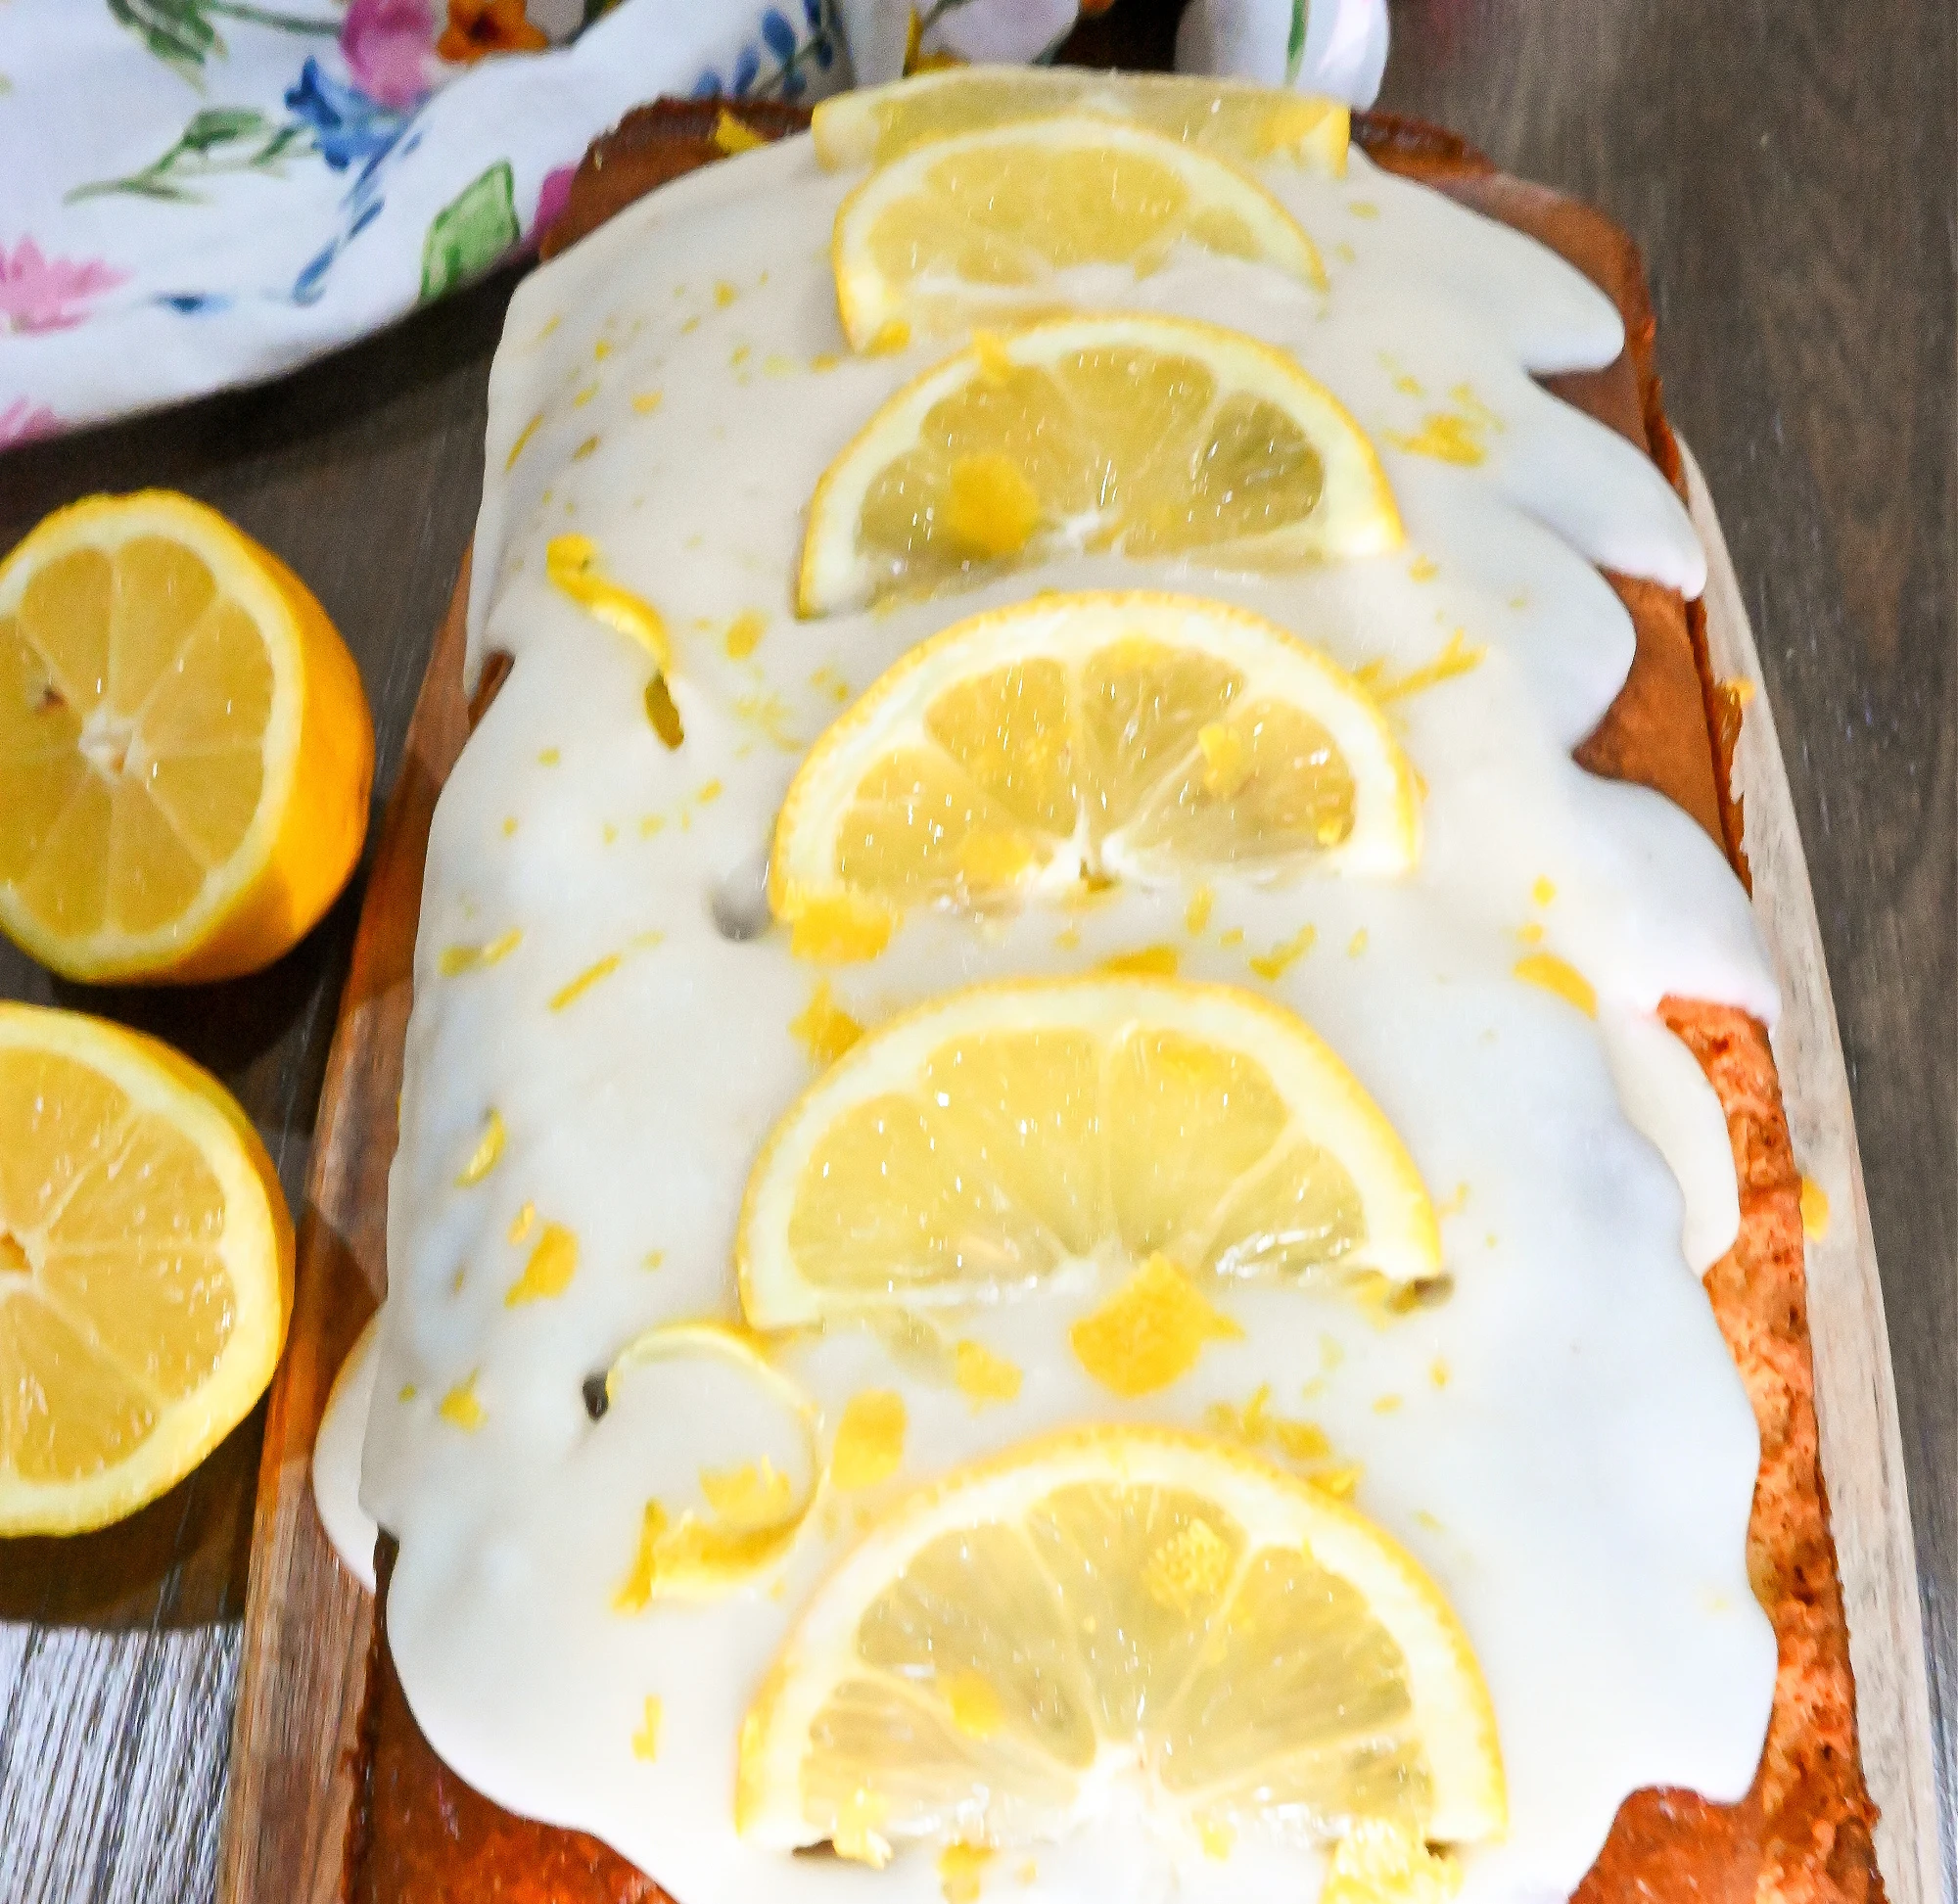 https://www.fittoservegroup.com/wp-content/uploads/2016/12/keto-lemon-cake-with-slices-of-lemon-and-lemon-zest-on-top-of-lemon-tangy-icing.jpg.webp